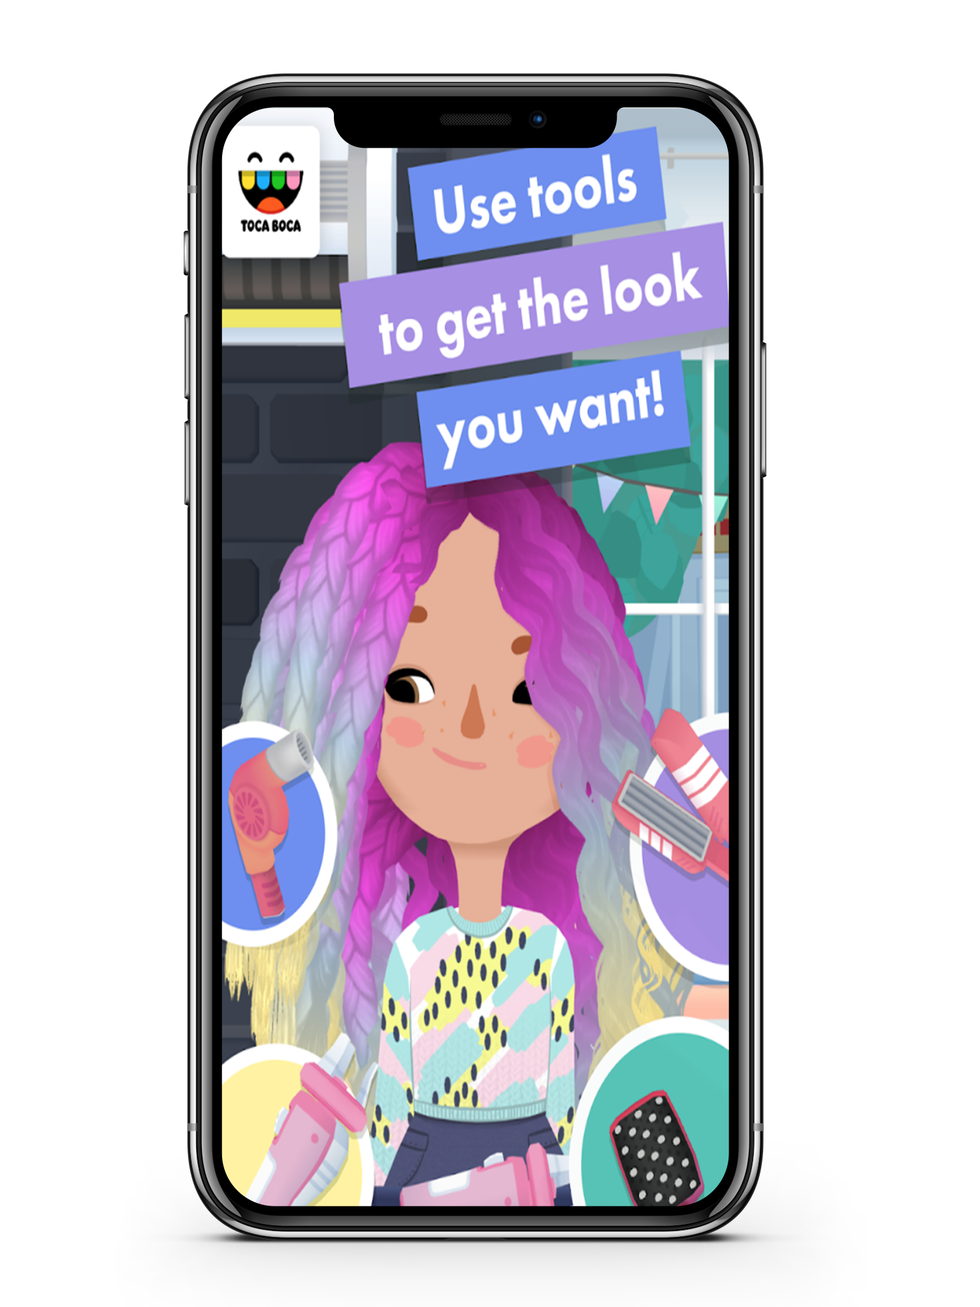 Toca hair salon app for children